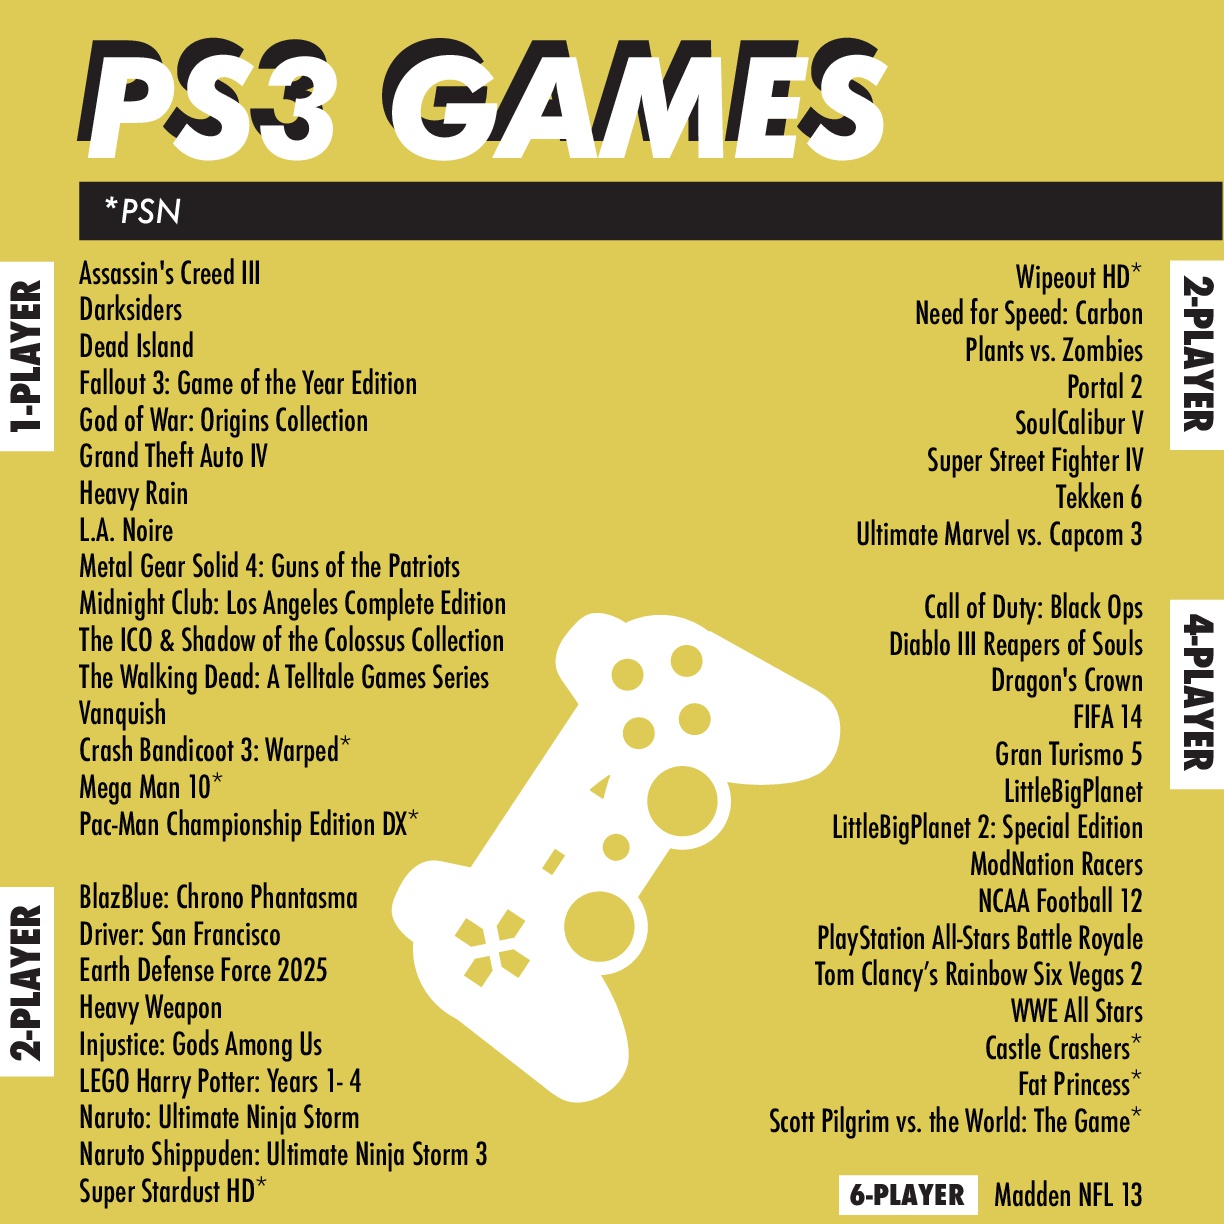 ASLC Student Life Gaming - PS3 Games